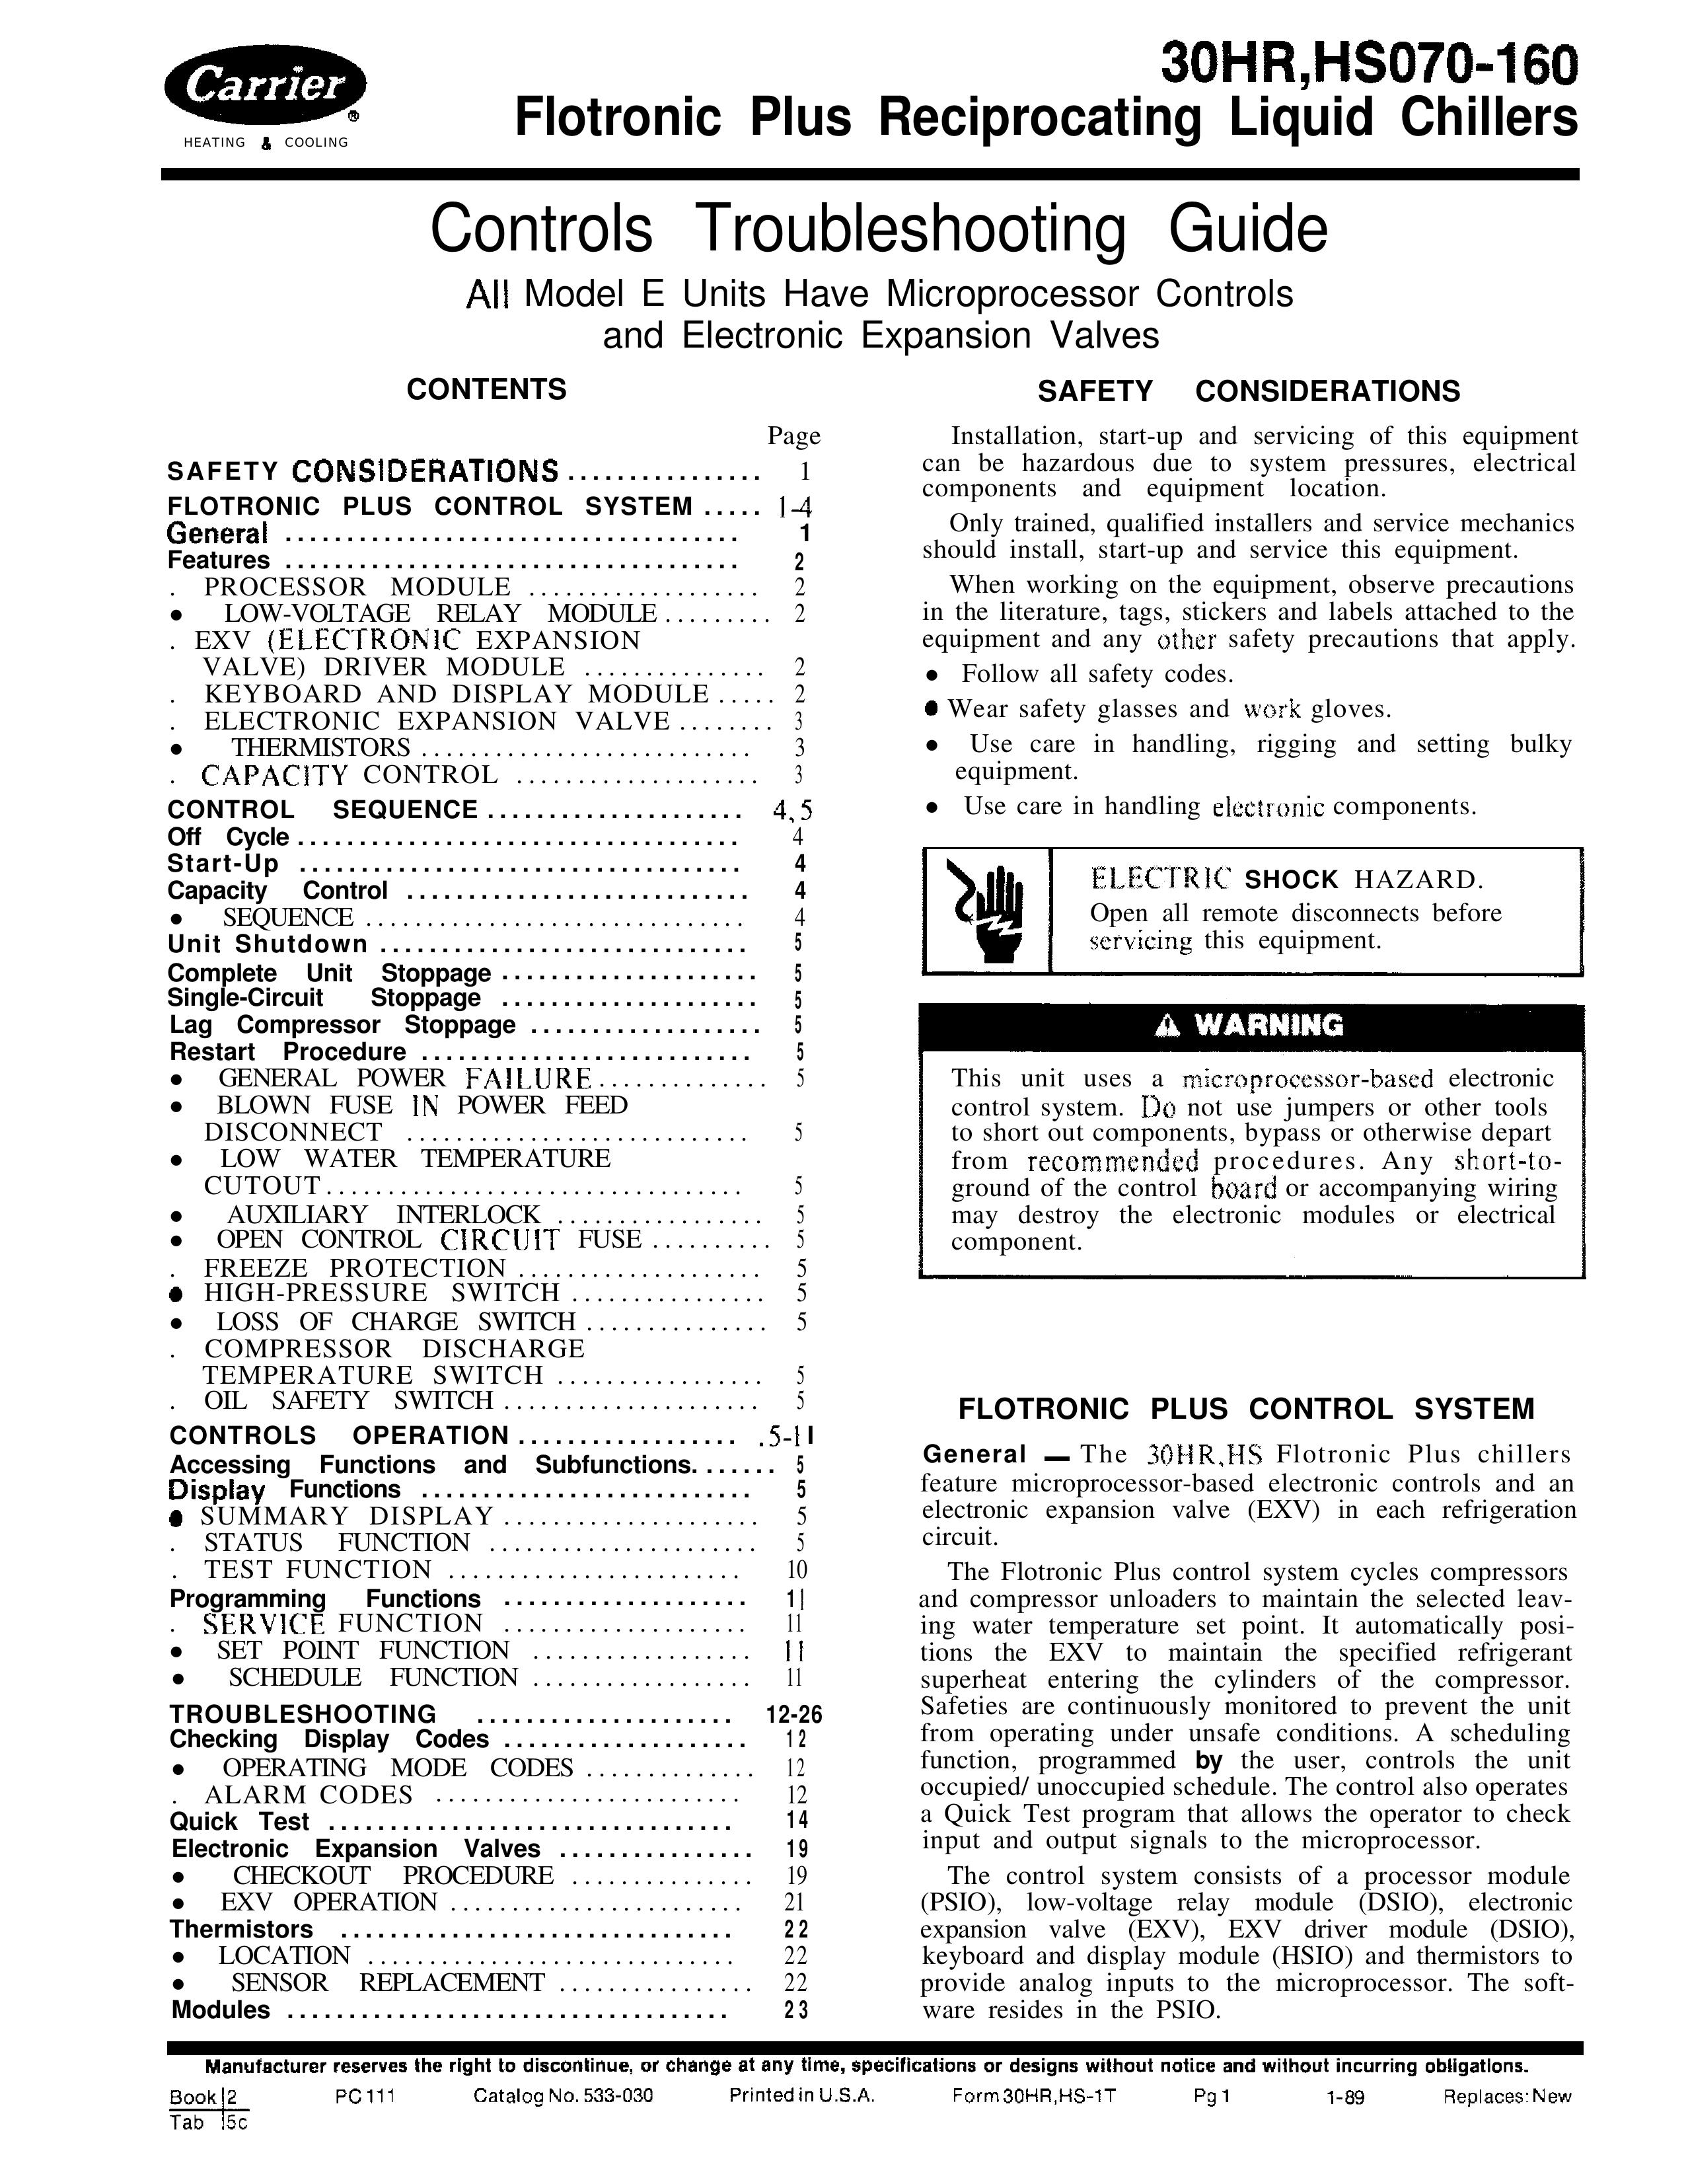 Carrier HS070-160 Refrigerator User Manual